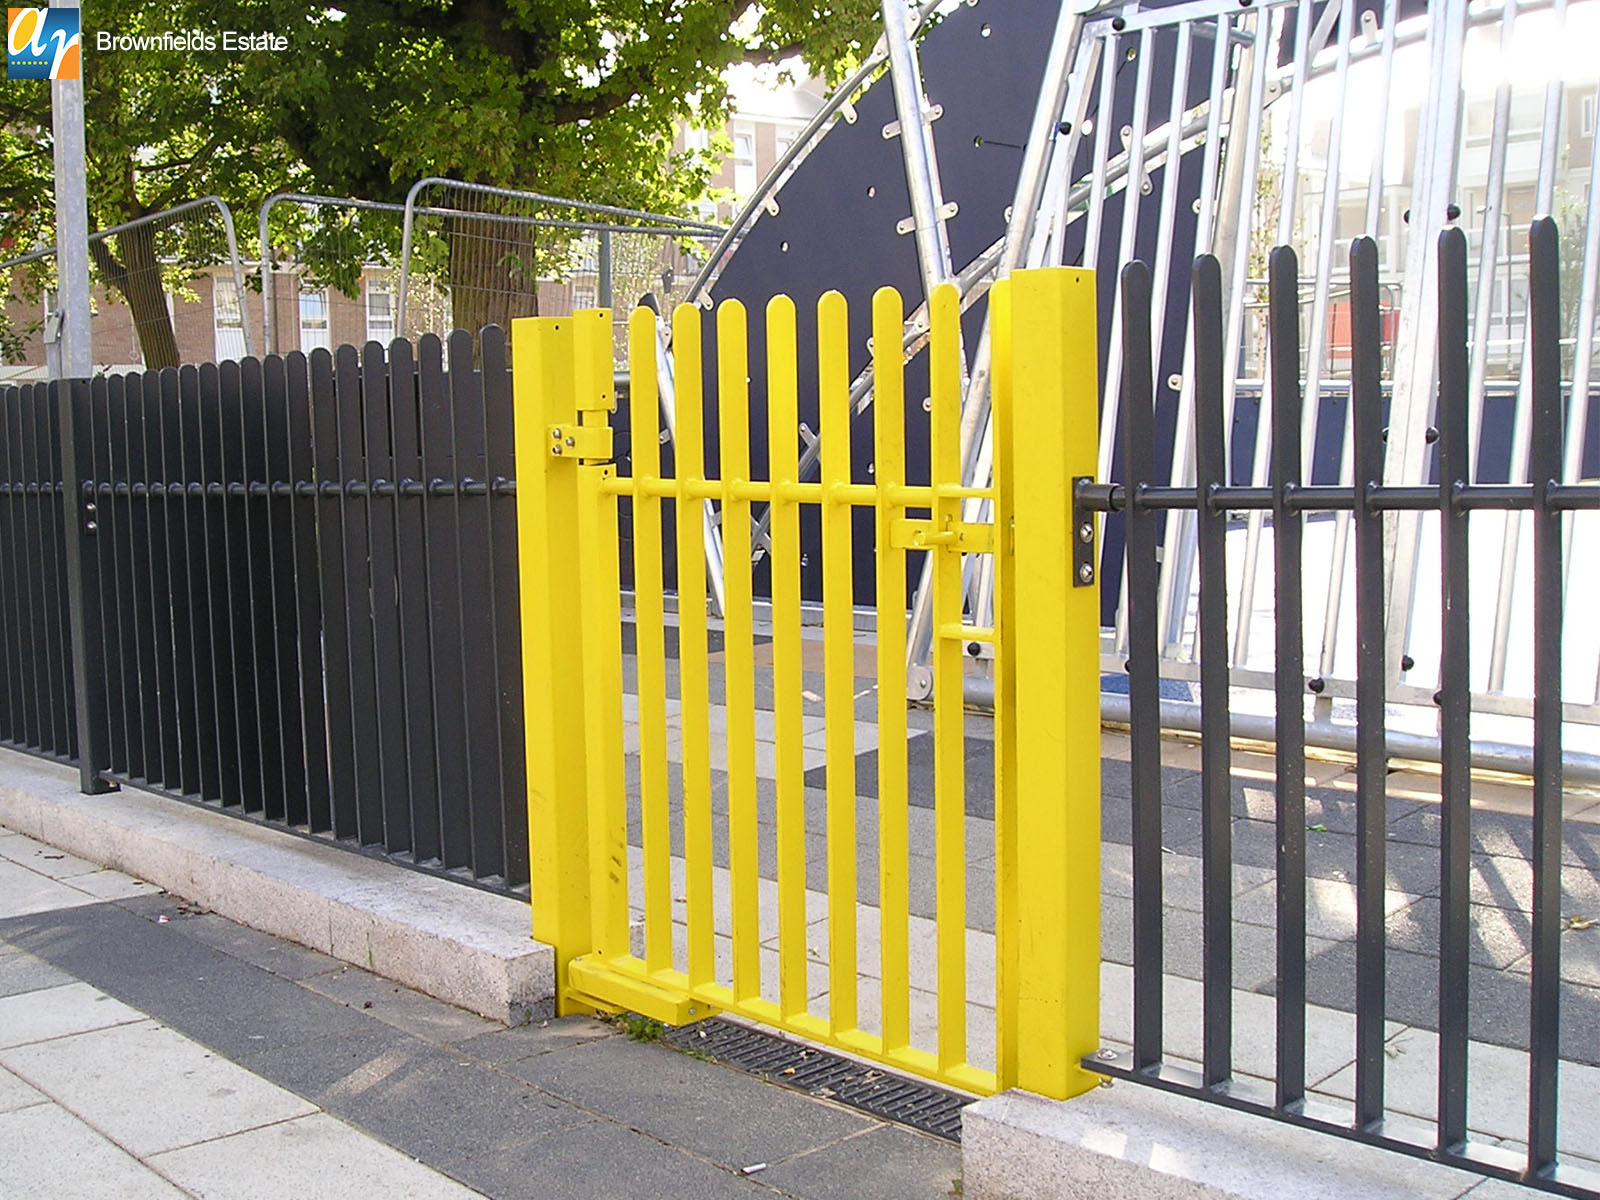 Brownfields estate metal gates